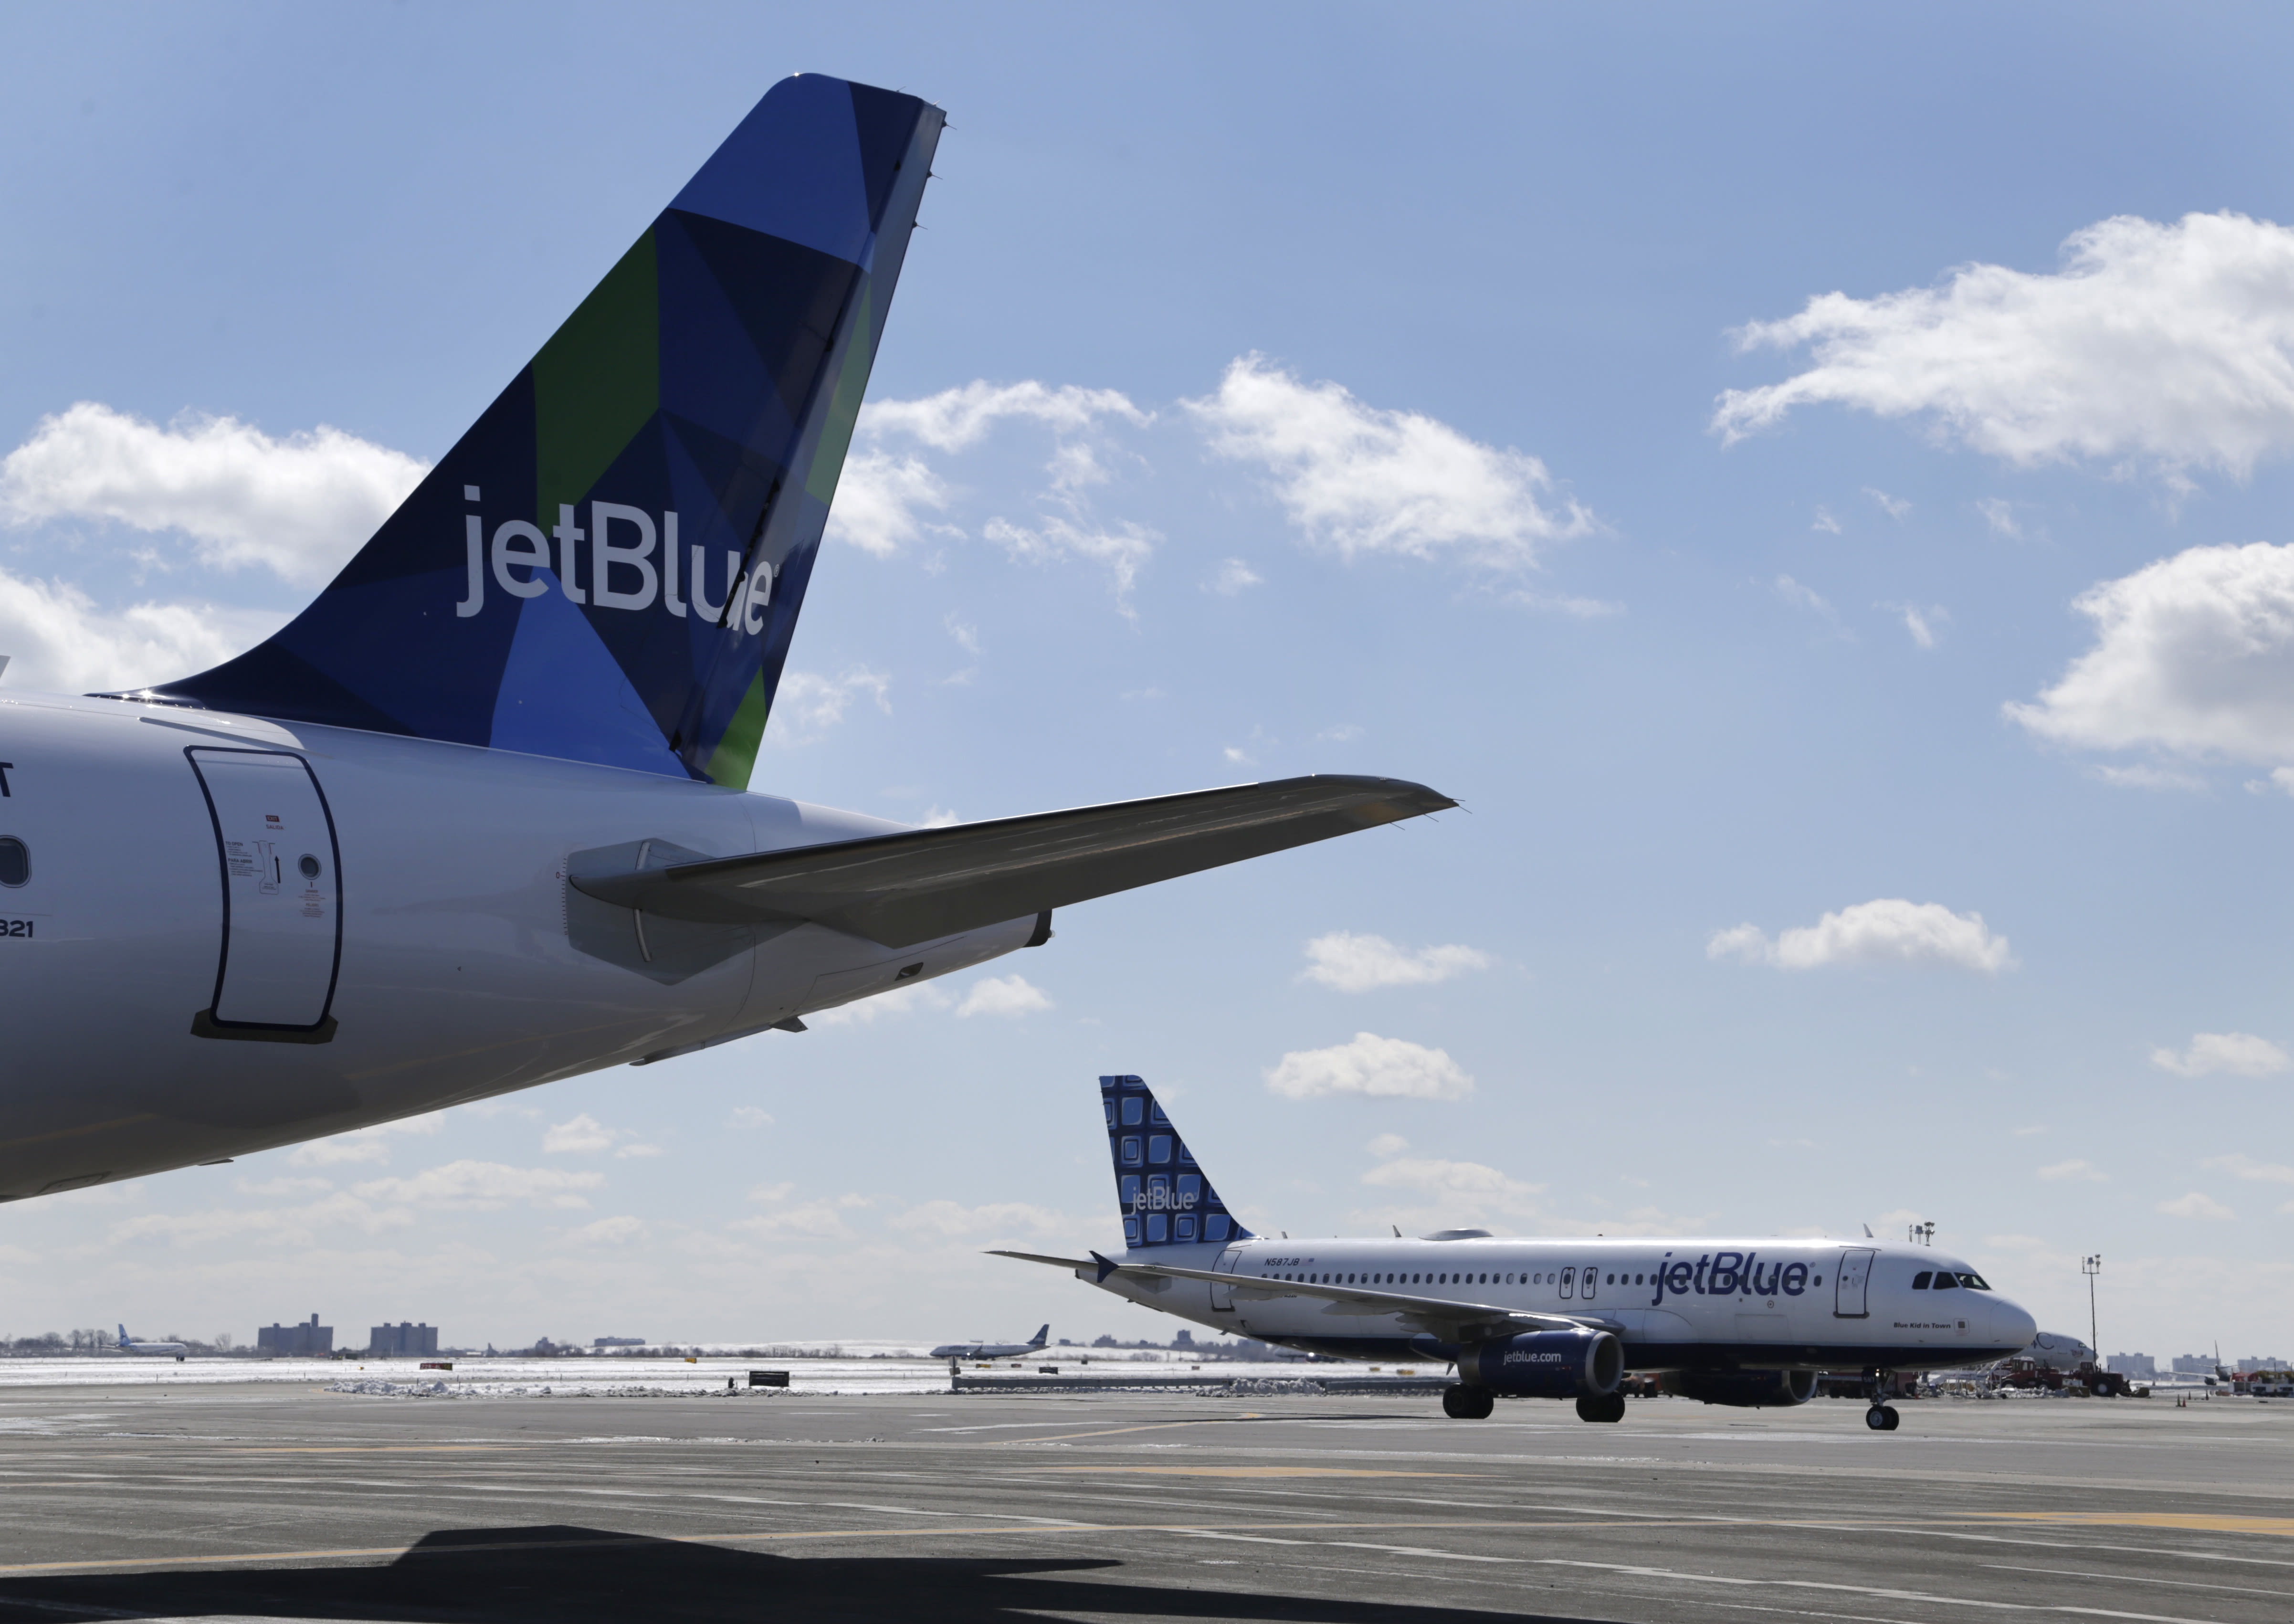 How to Use a JetBlue Flight Credit - NerdWallet